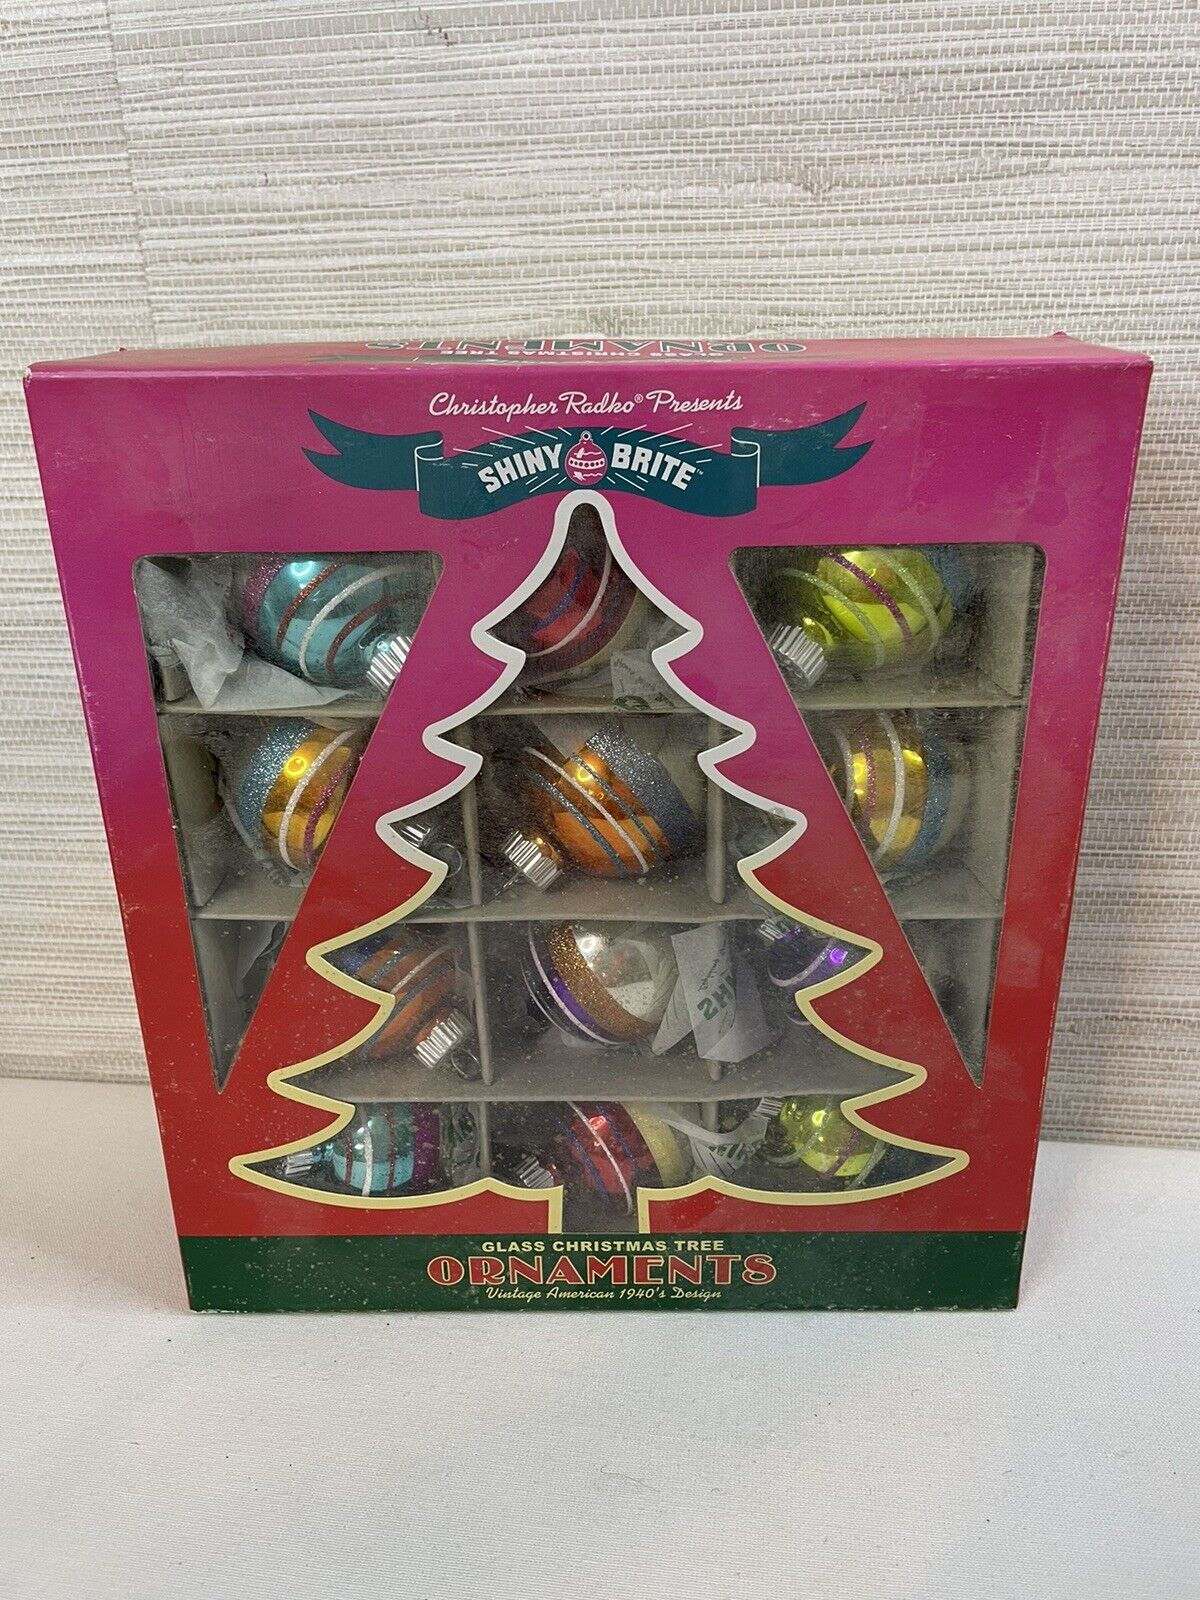 Shiny Brite Christopher Radko Christmas ornaments box of 12 2012  vintage 40”s